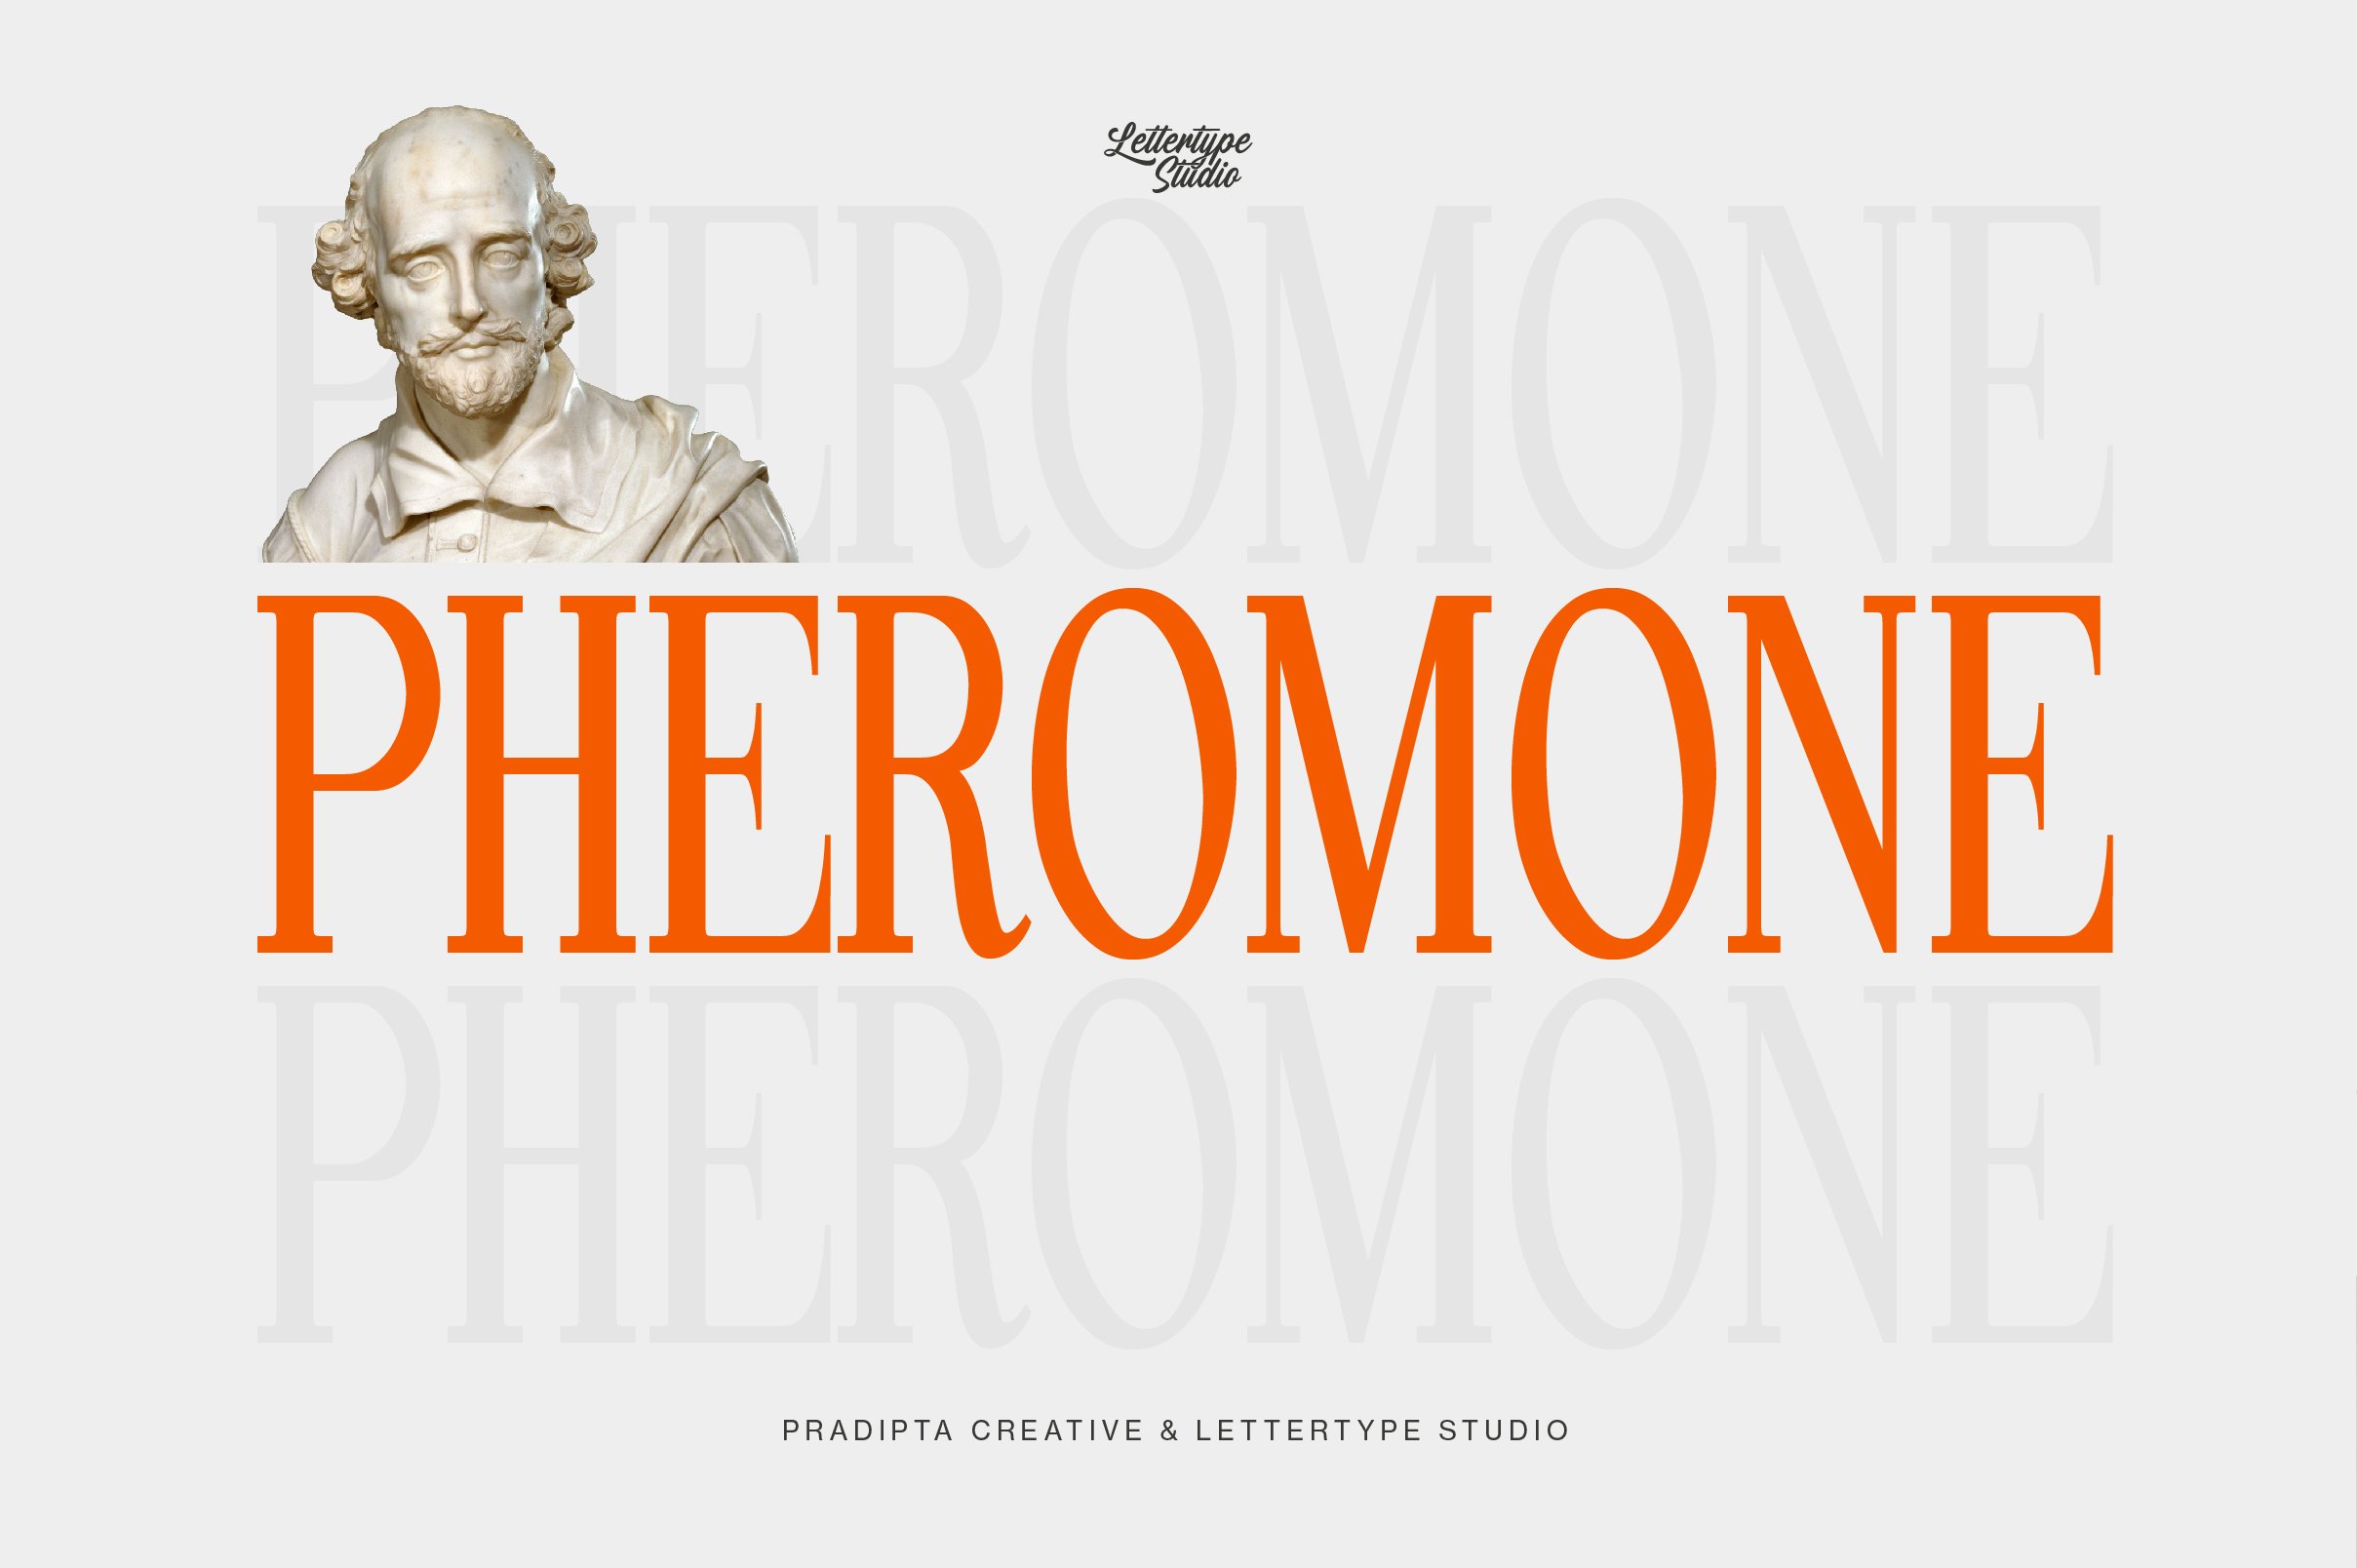 Pheromone | Modern Classic Serif cover image.